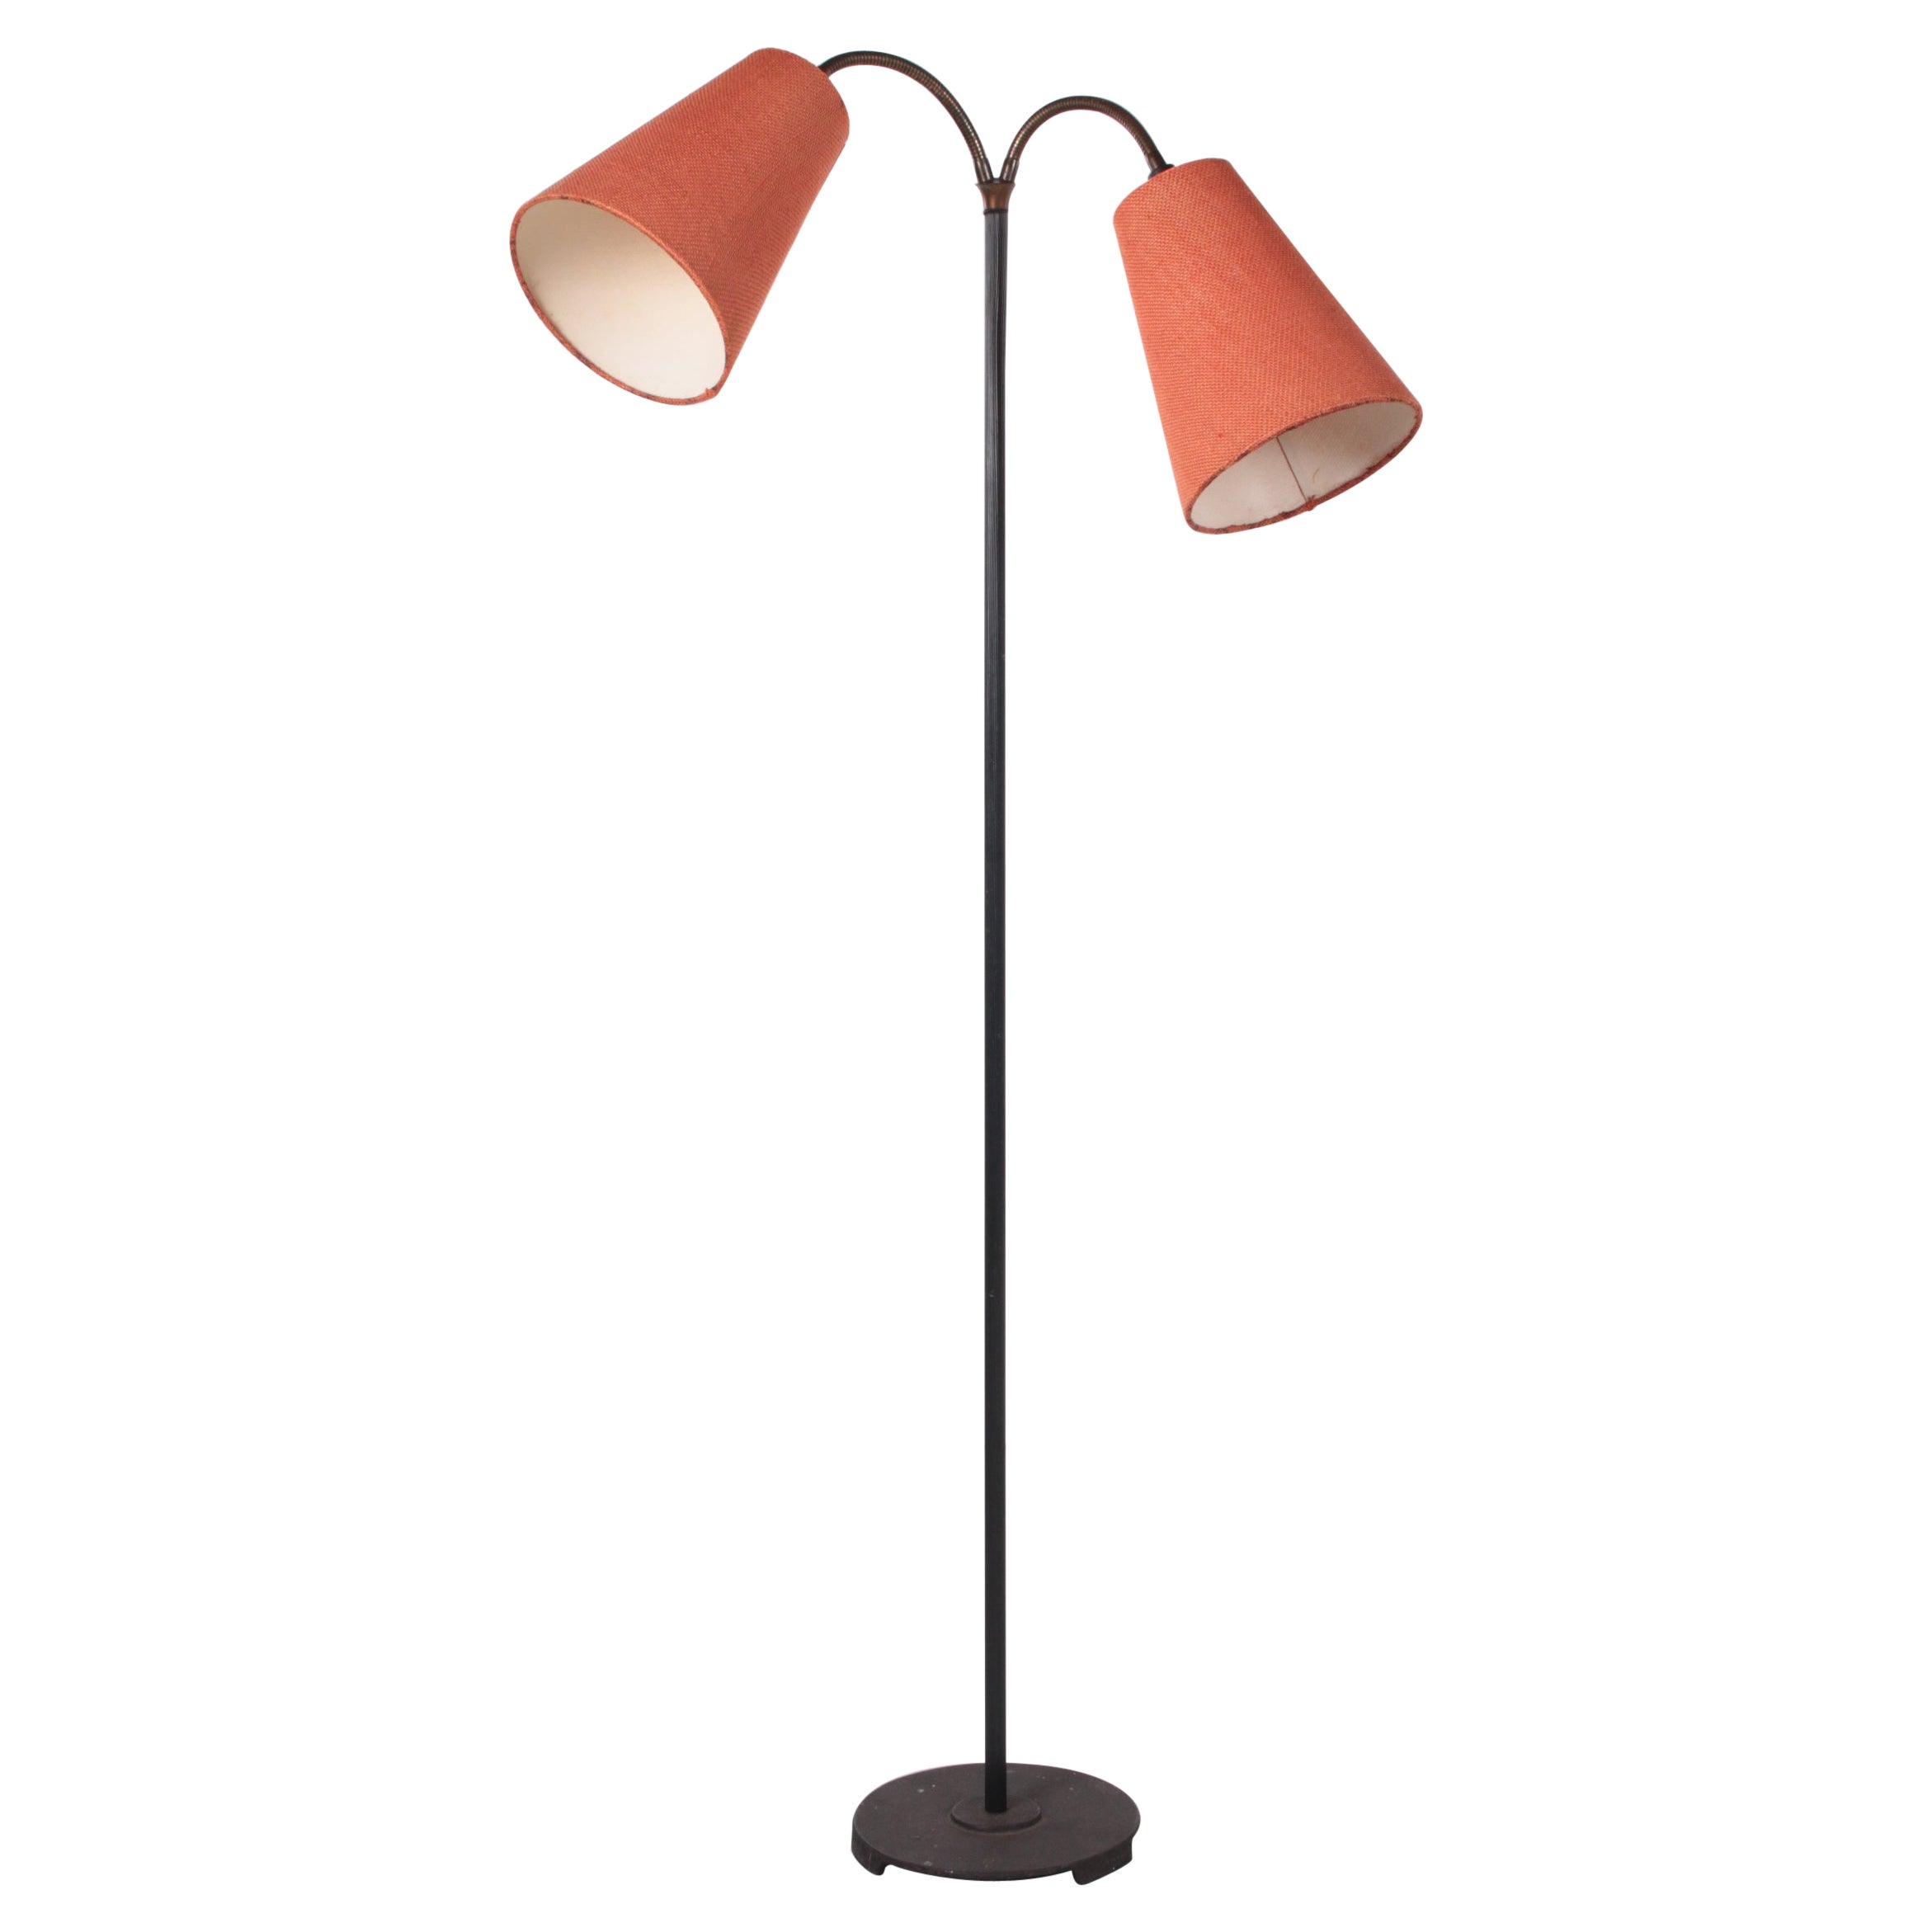 Orange Standing Lamp - 6 For Sale on 1stDibs